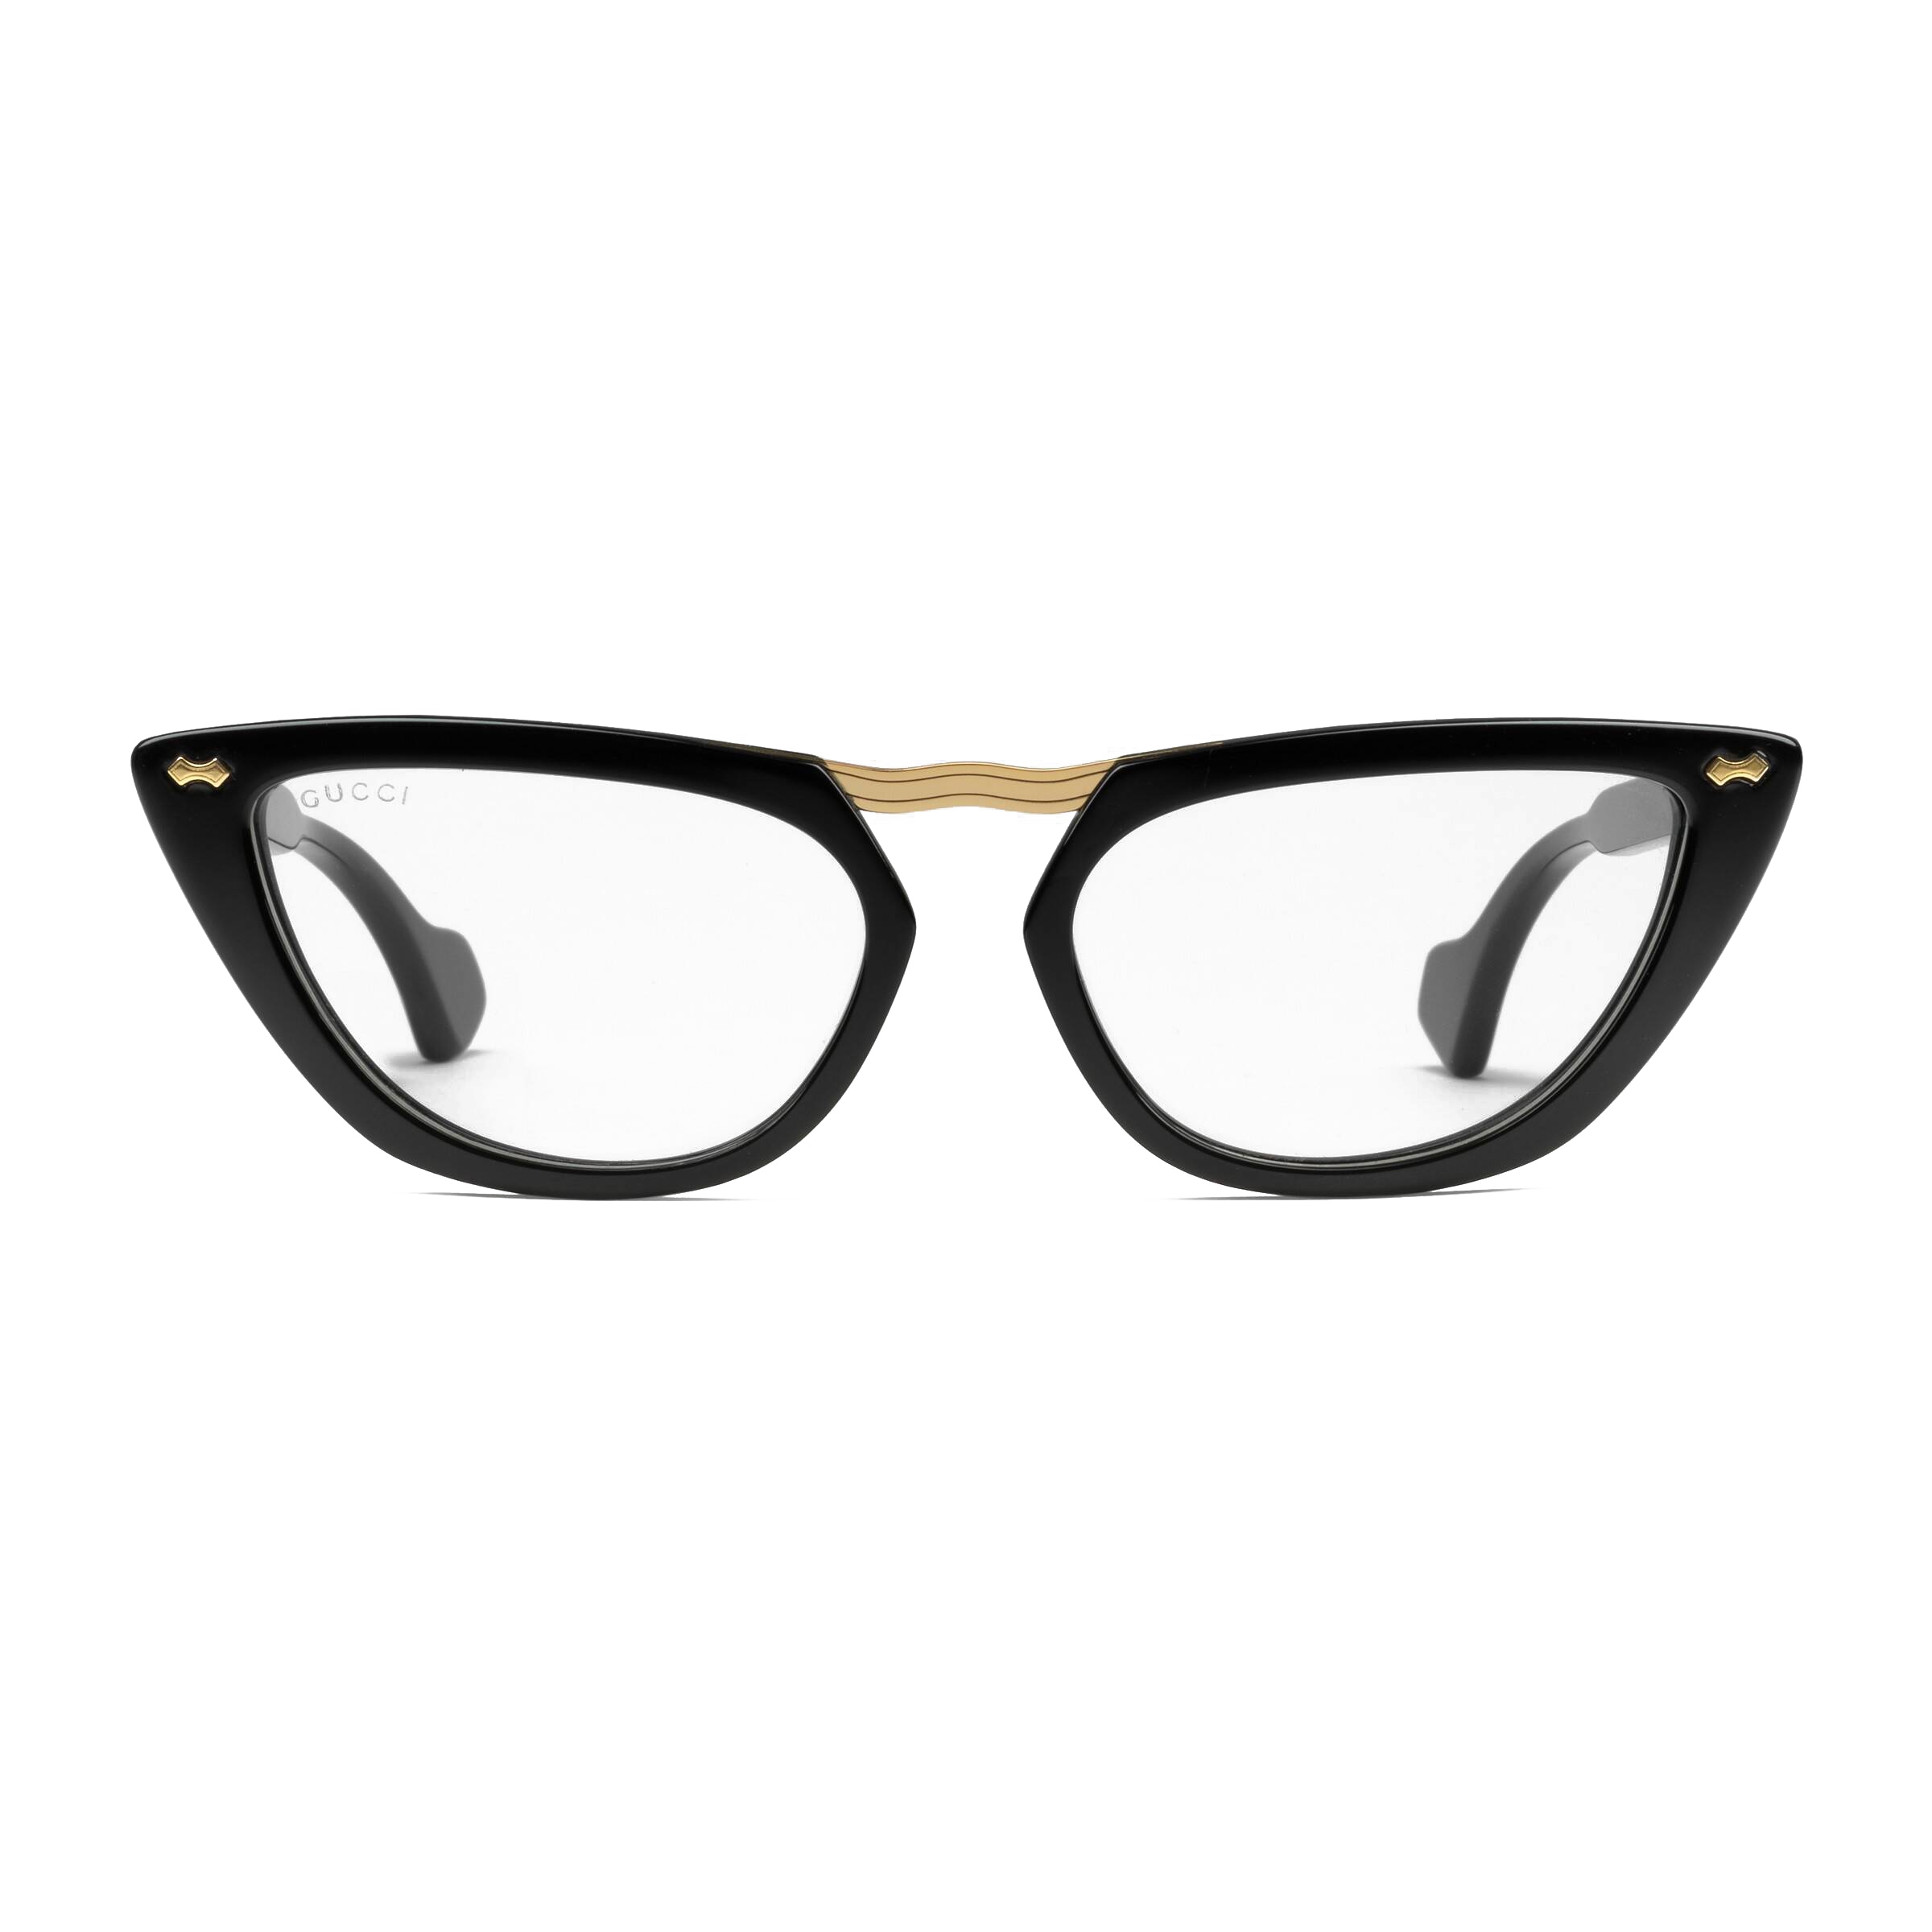 Gucci Cat-Eye Frame Sunglasses